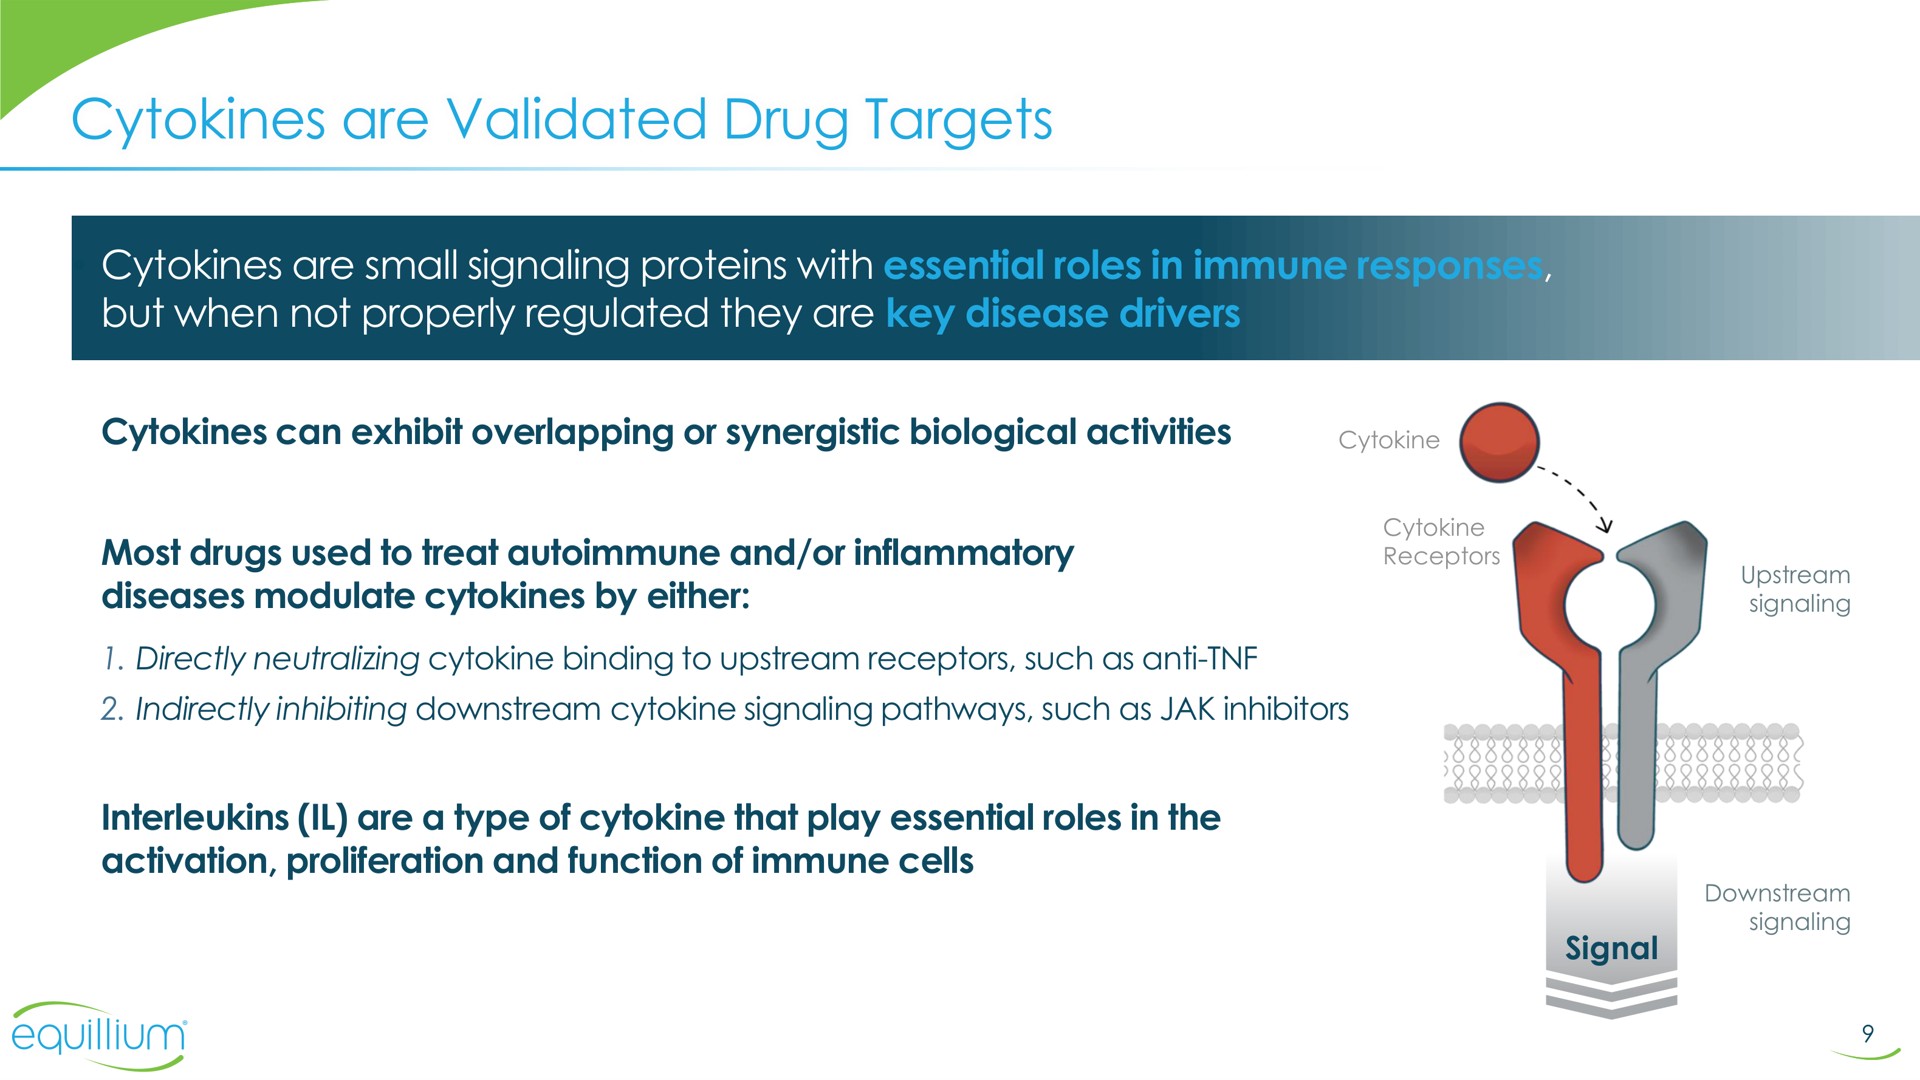 are validated drug targets | Equillium